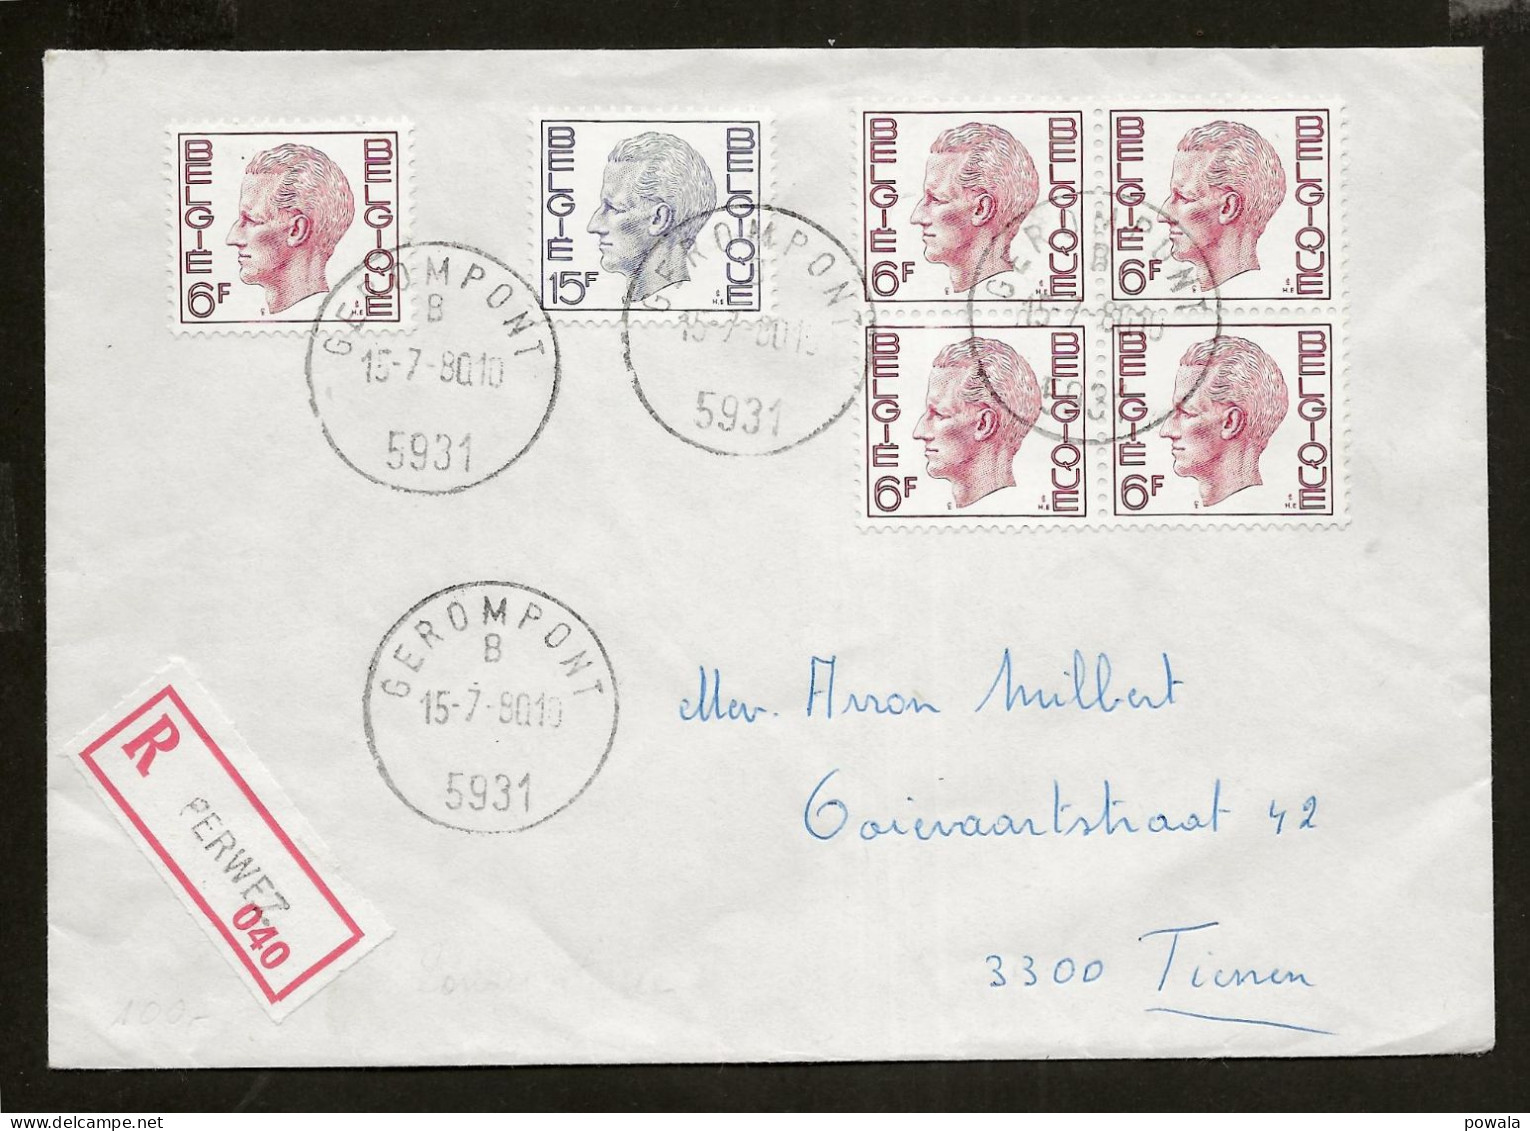 Bestellershalte GEROMPONT 15/7/1980 Stempel Zonder Sterren Letter B Op Recommande - Sterstempels